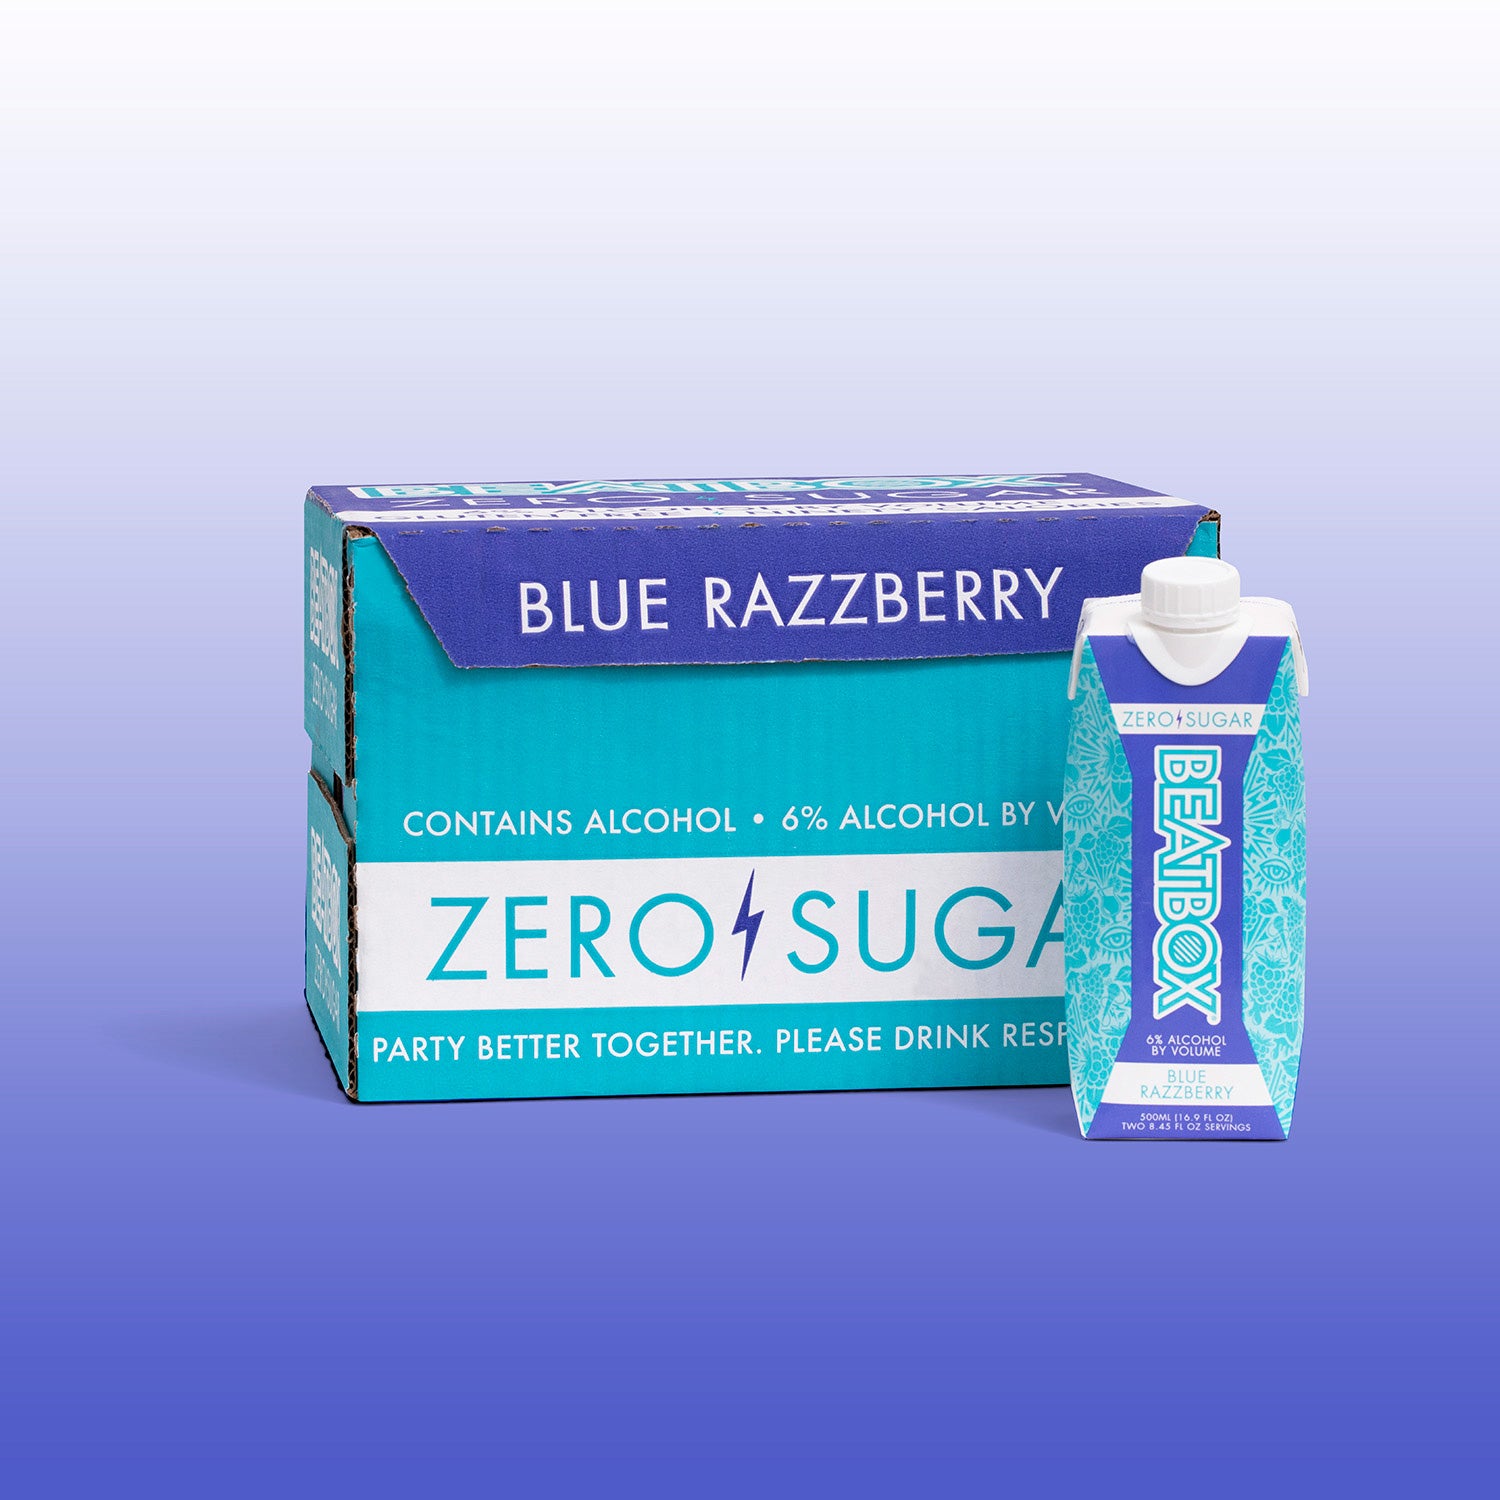 Blue Razzberry | Zero sugar - 12 pack